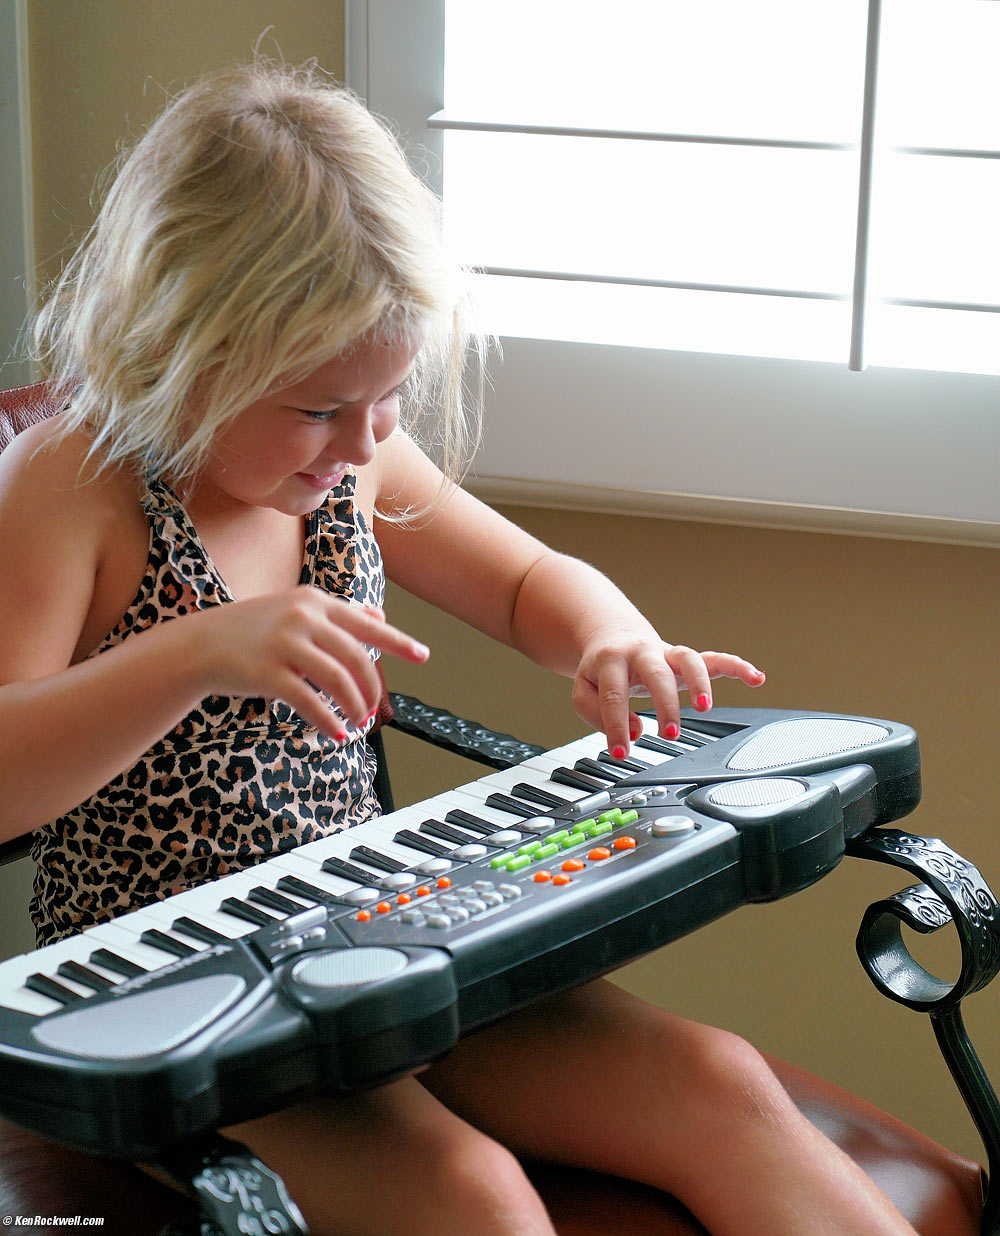 Katie plays keyboards in leopard print